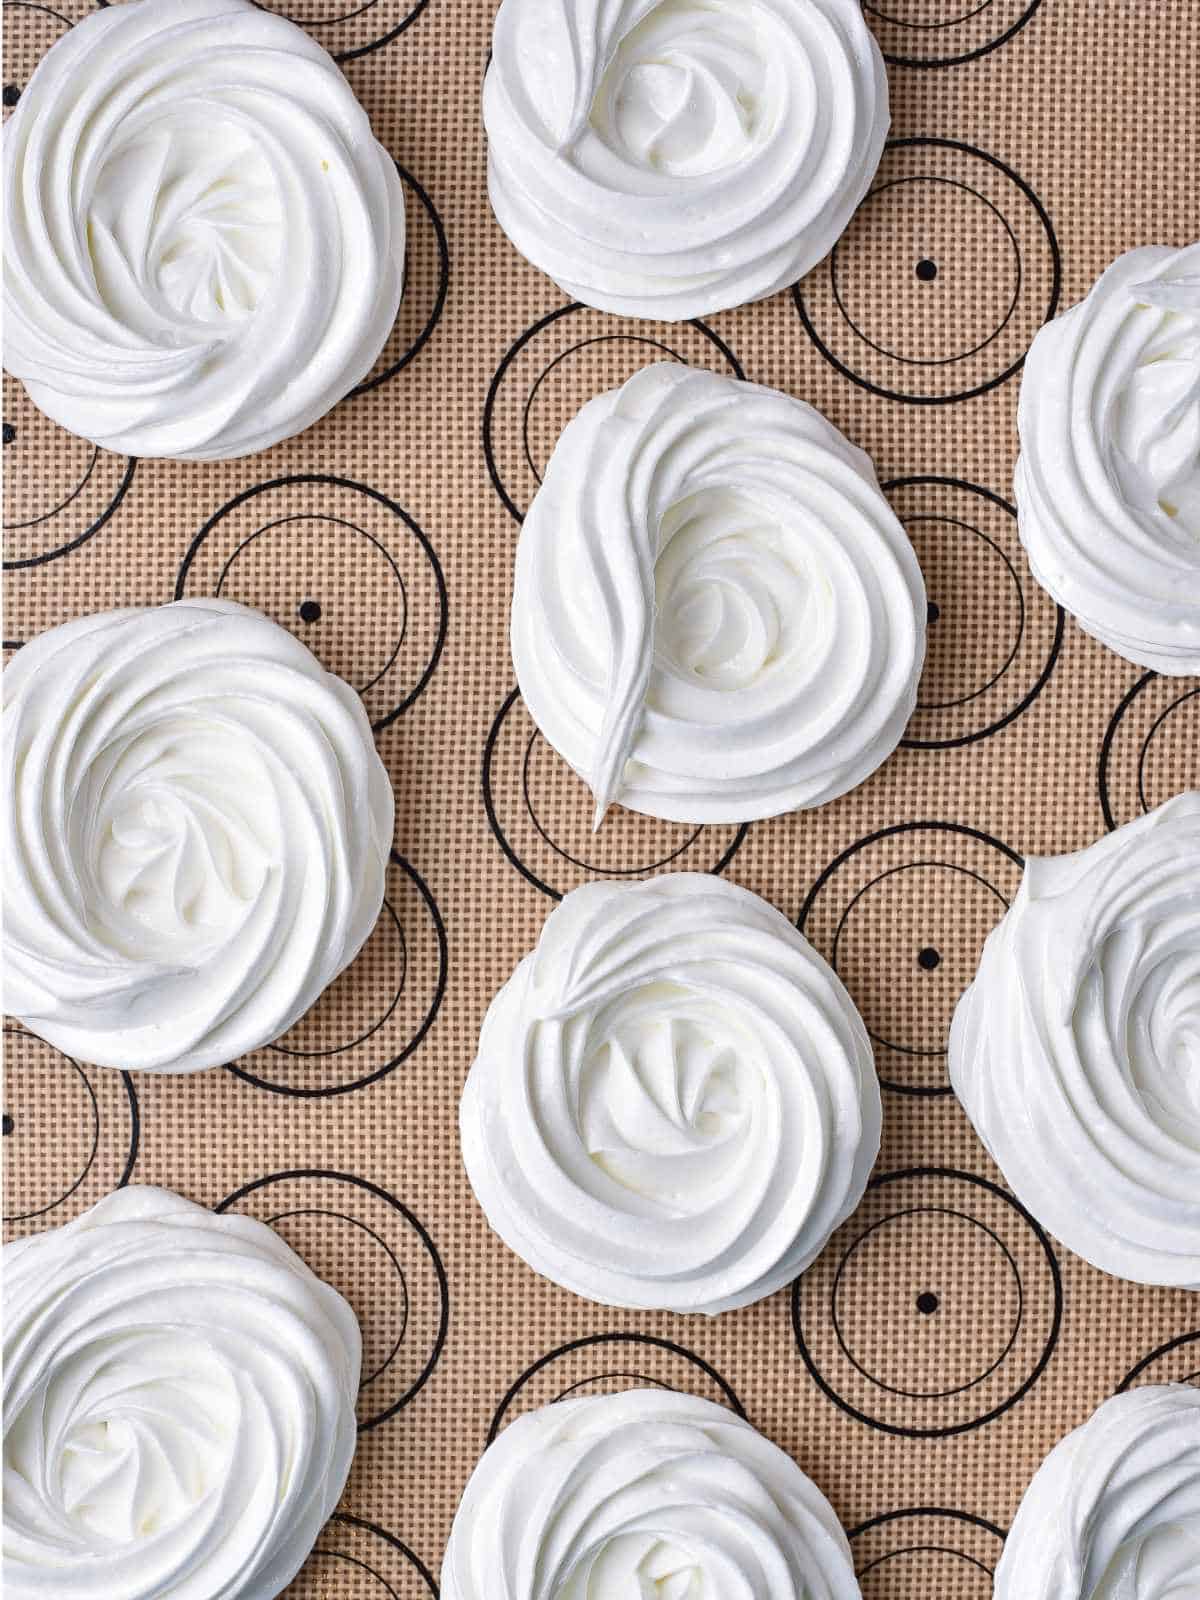 Swirled circles of whipped egg whites on baking mat.